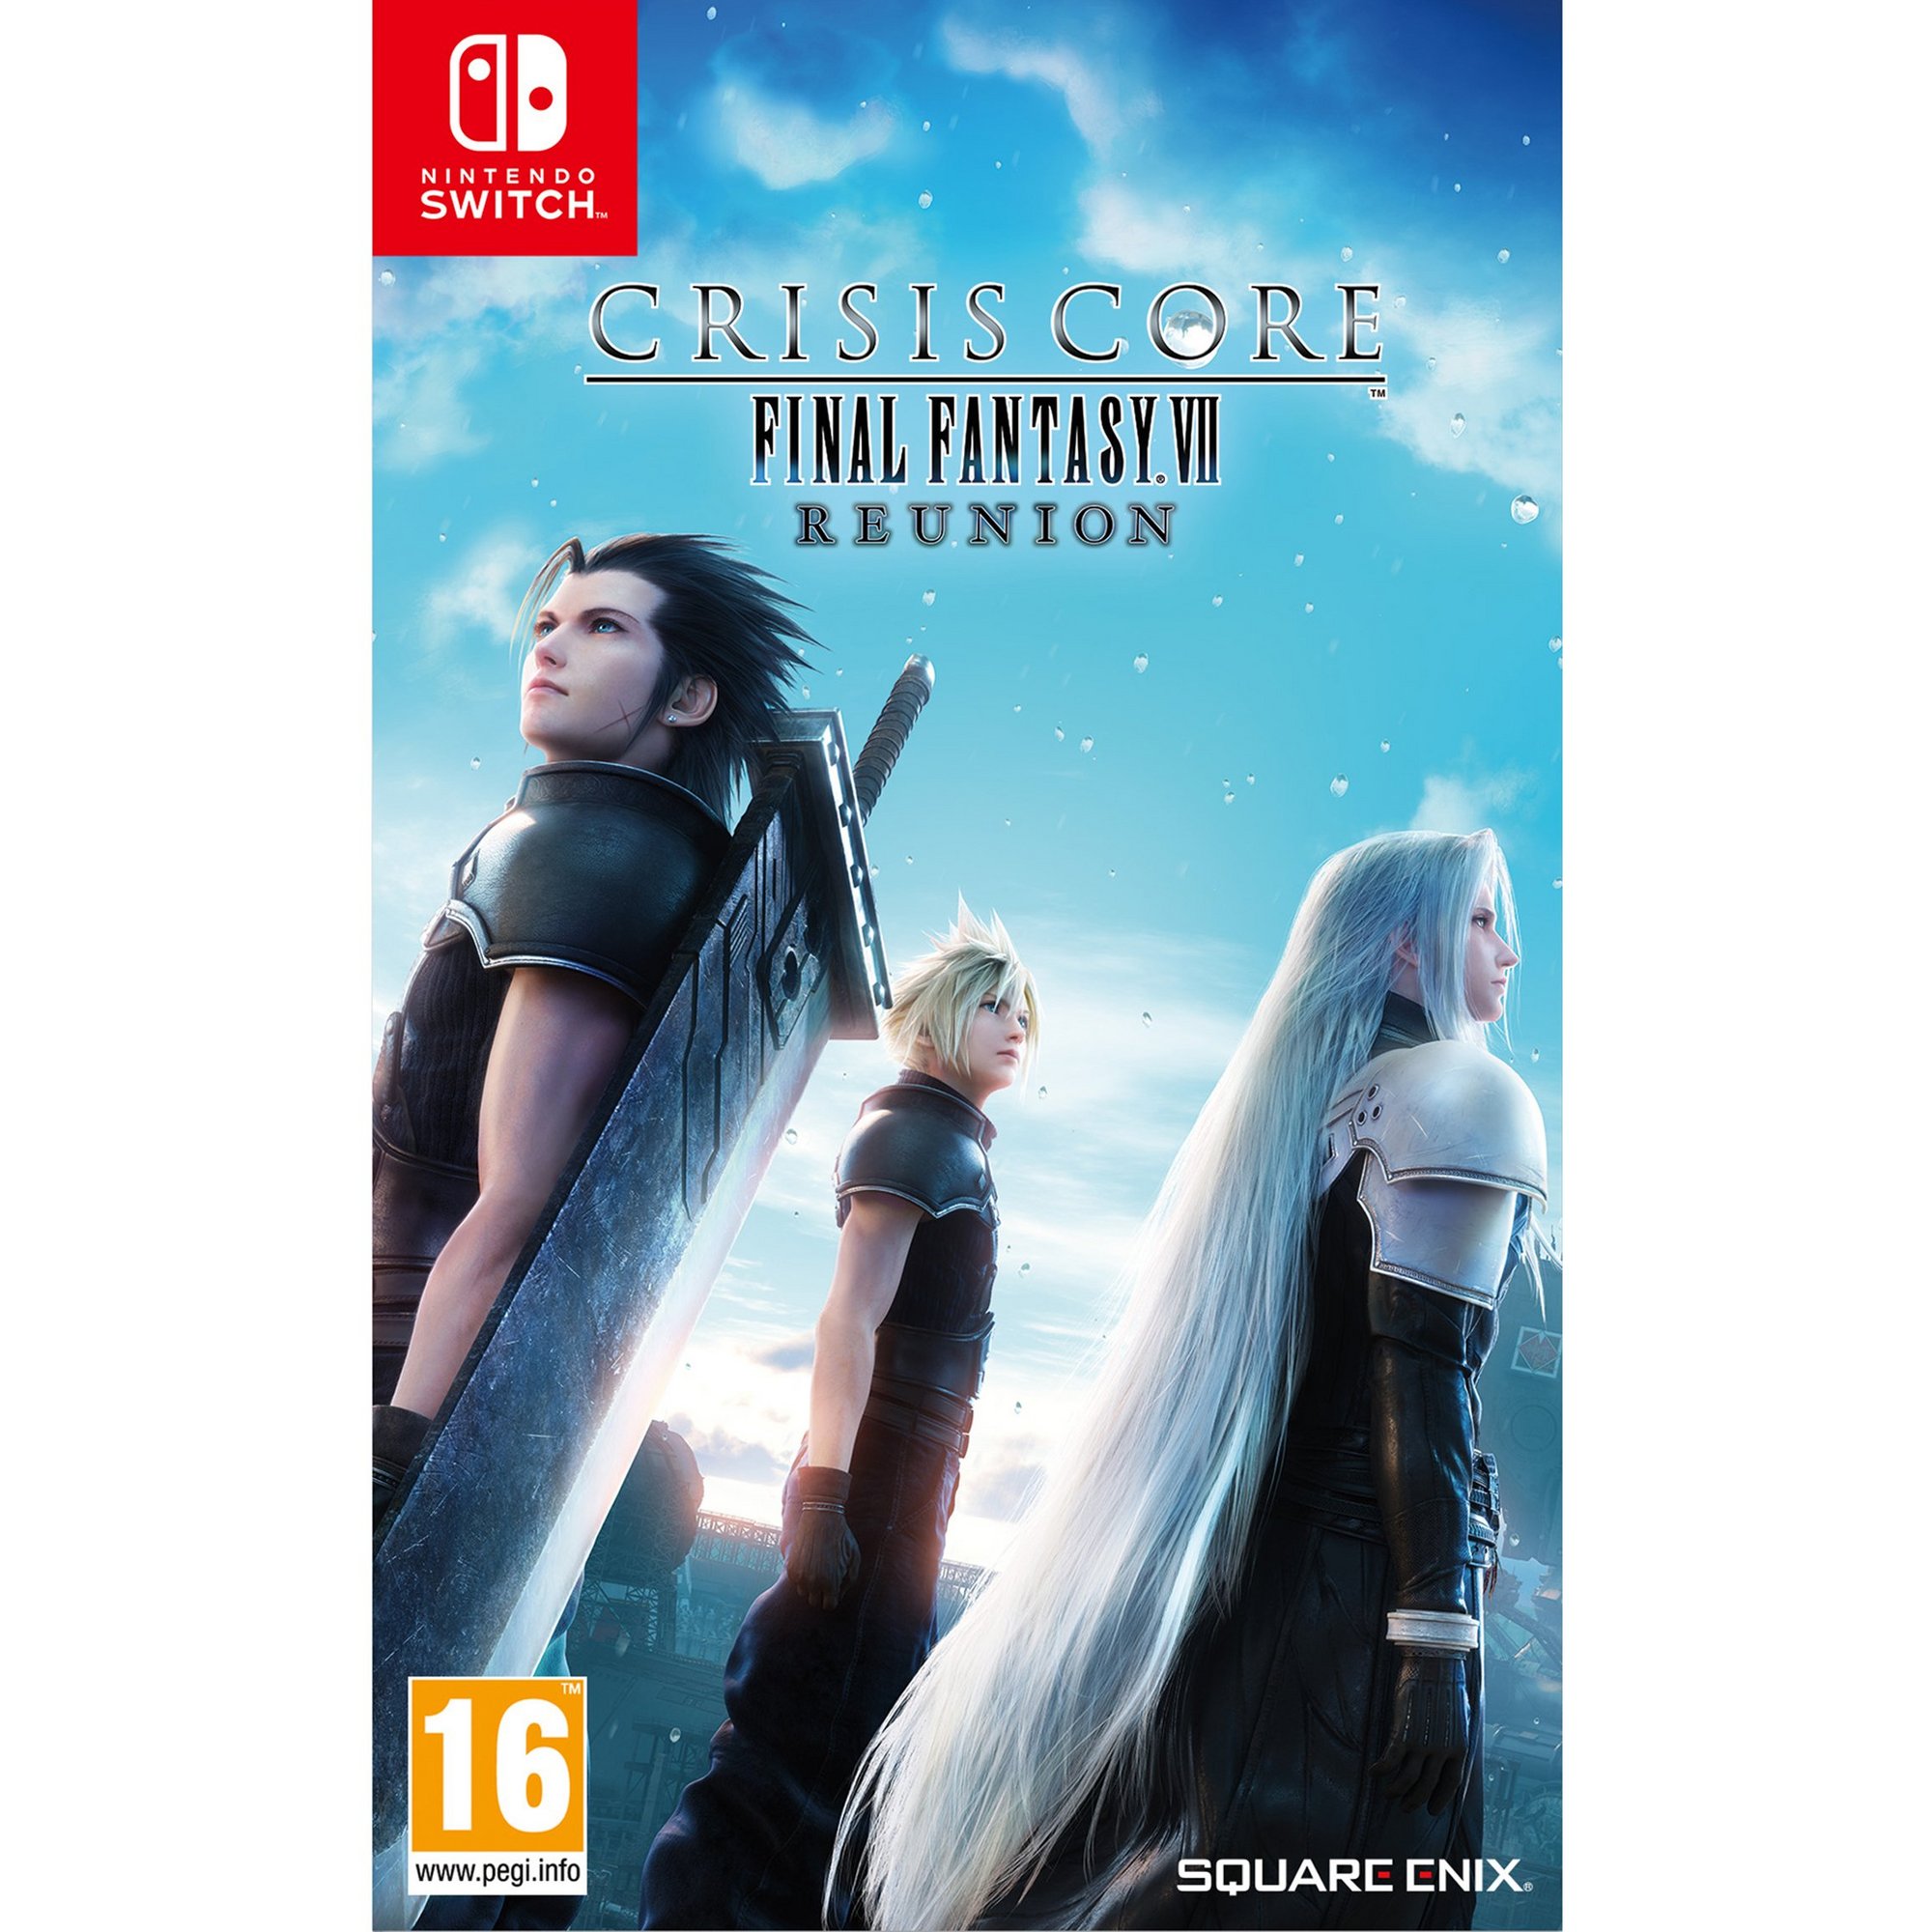 Nintendo Switch: Crisis Core: Final Fantasy VII Reunion